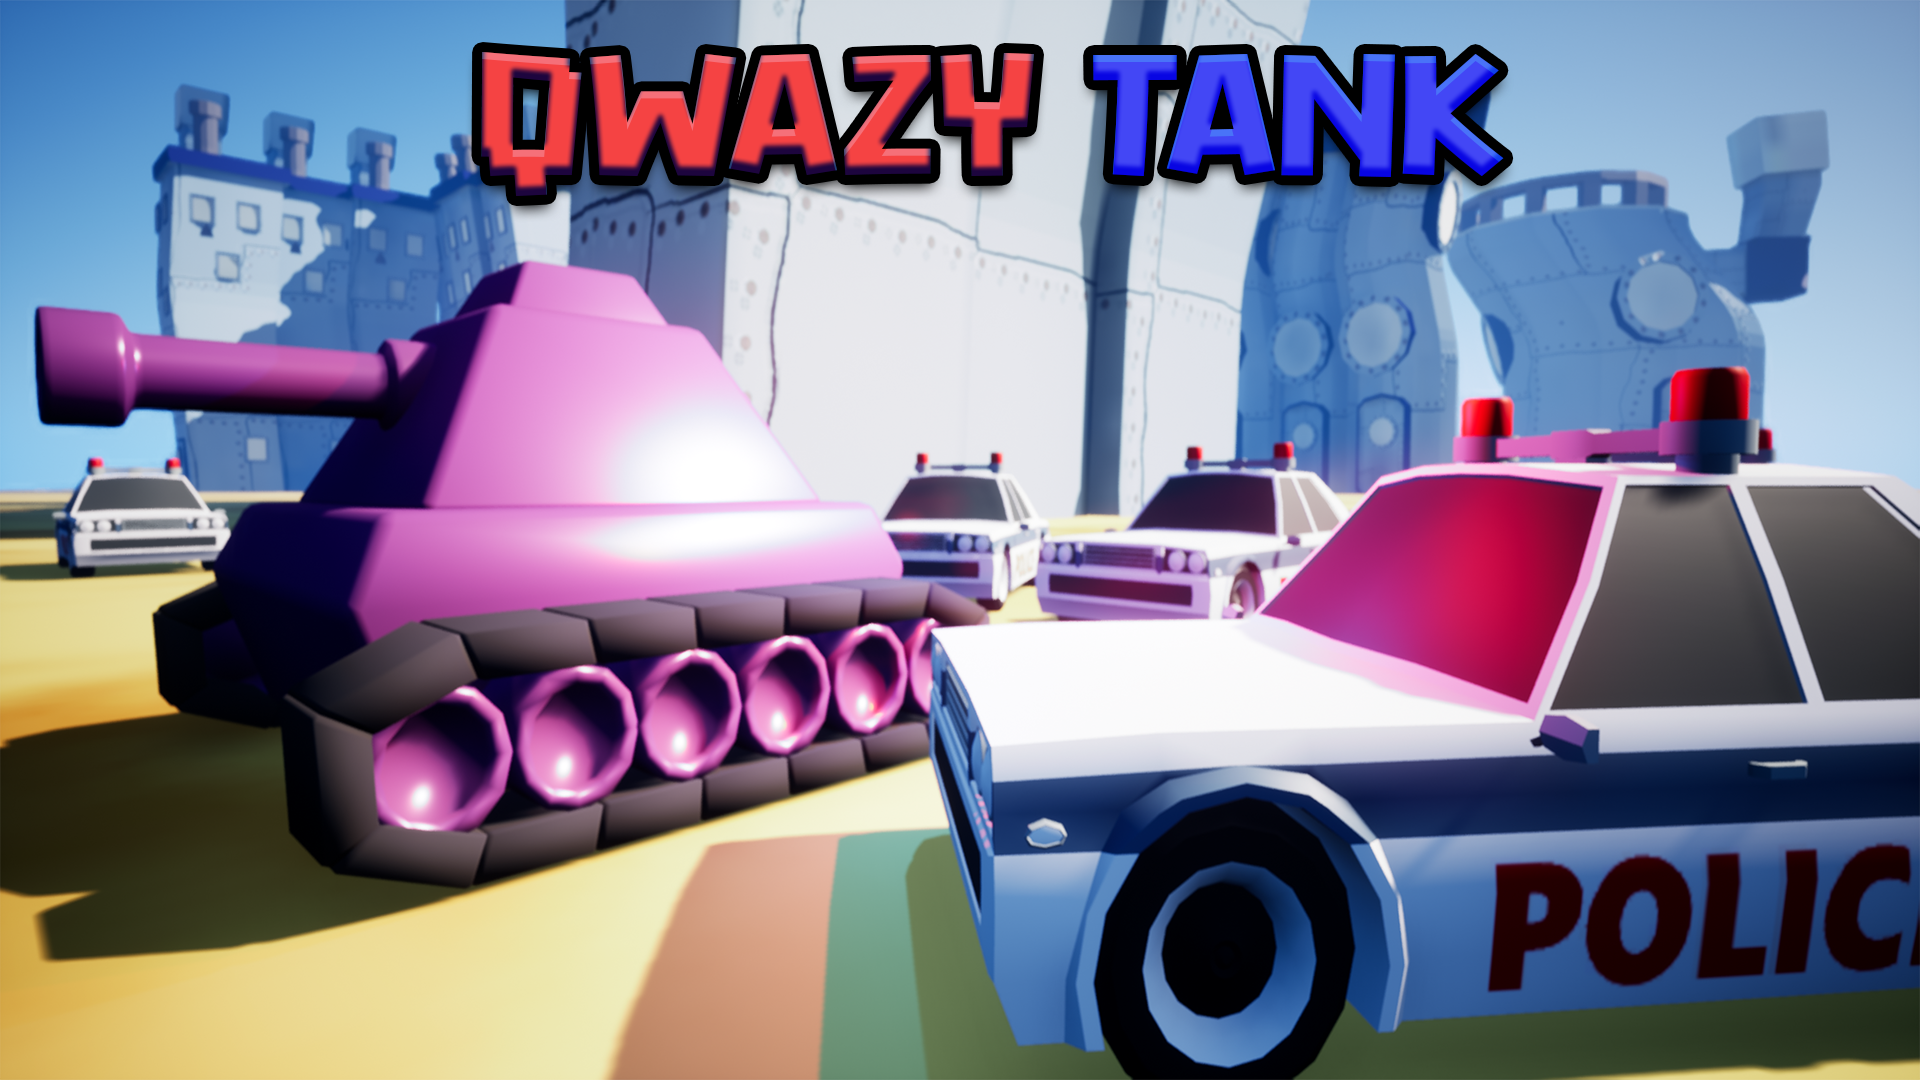 Qwazy Tank